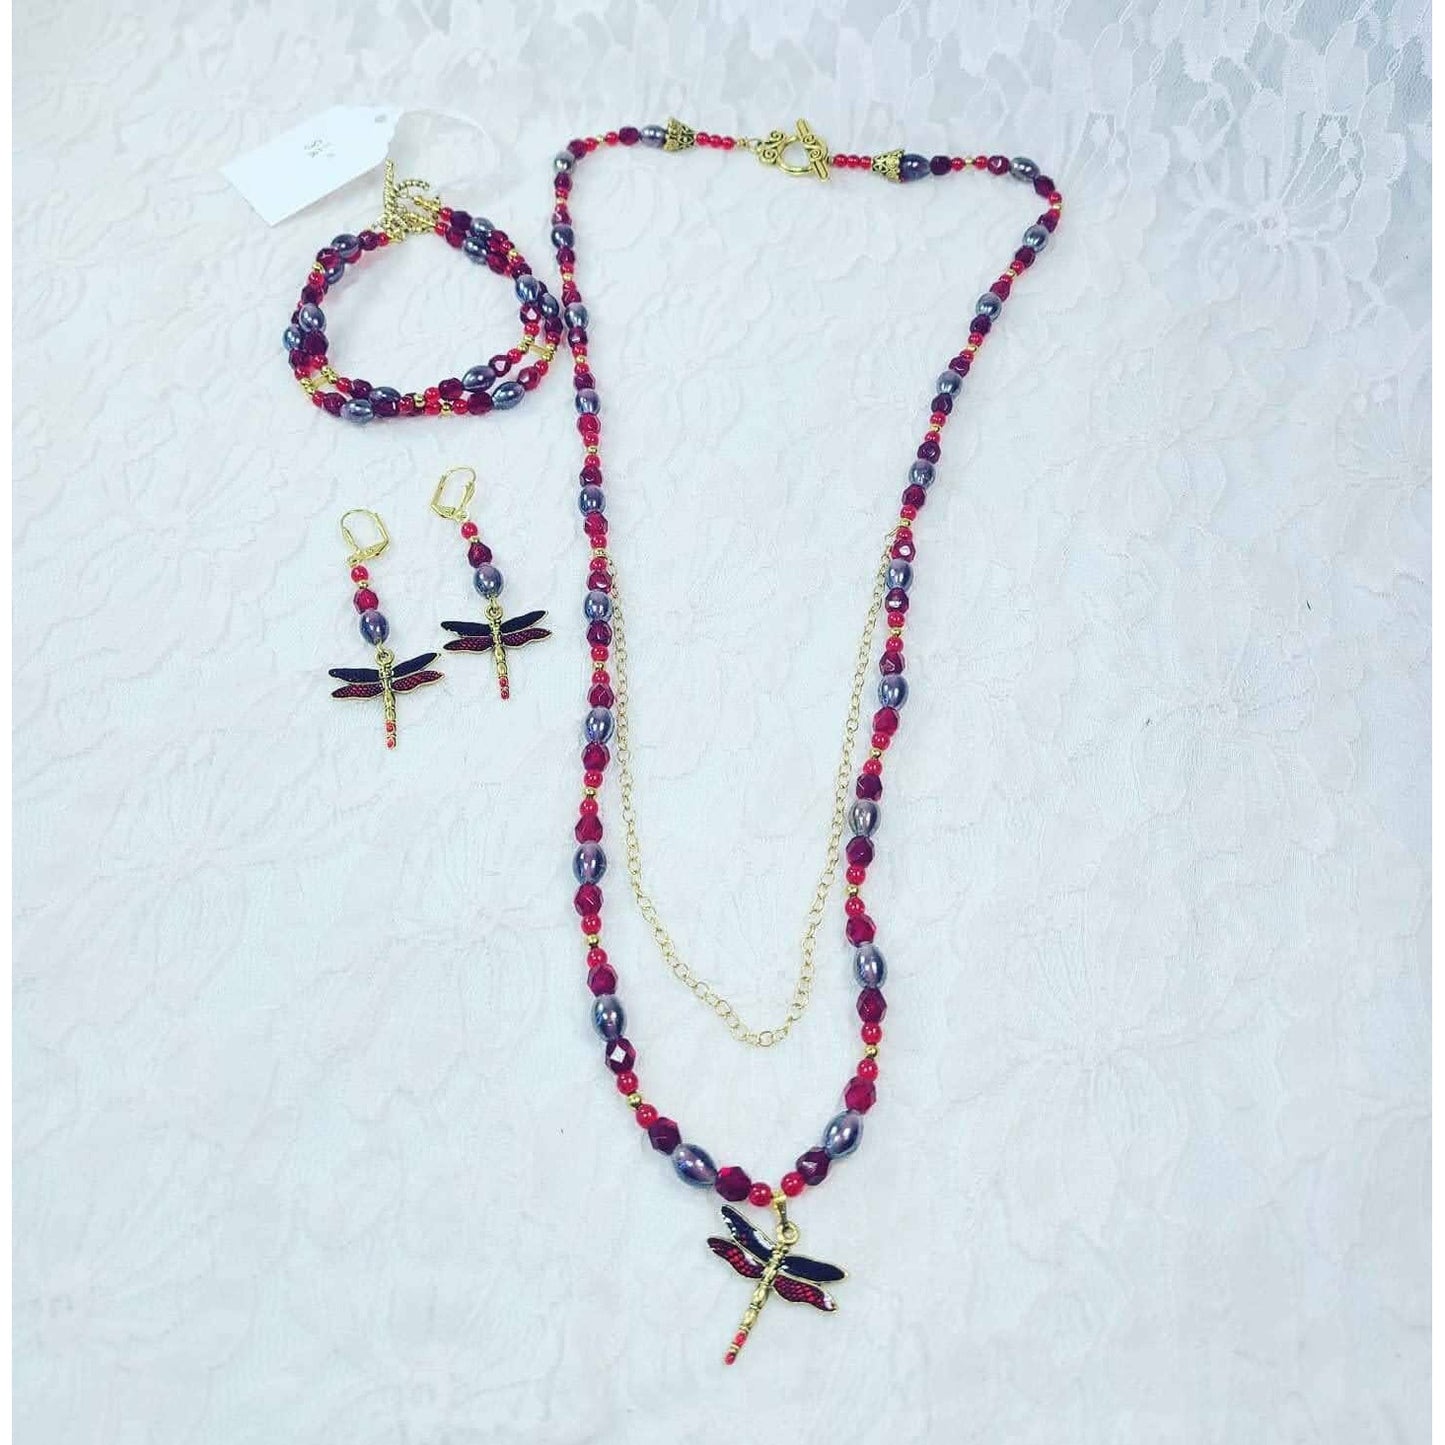 OOAK Jewelry SET Dragonflies: Earrings, Bracelet, Necklace Garnets, Faceted Czech Glass Beads w/Purple Pearls & 24kt Gold Plated Accents